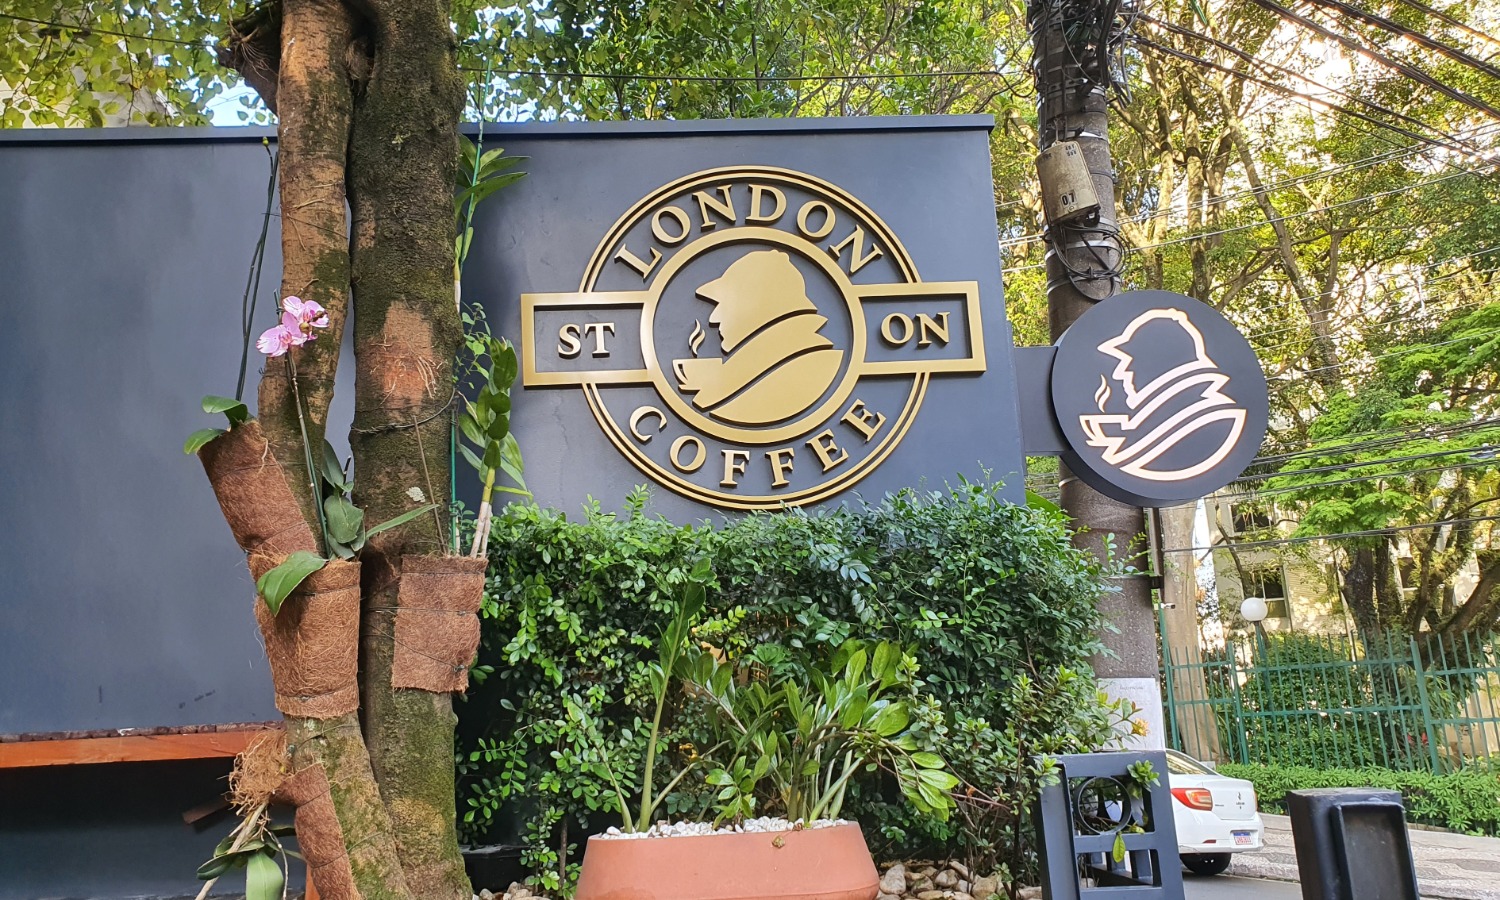 London Coffee Station